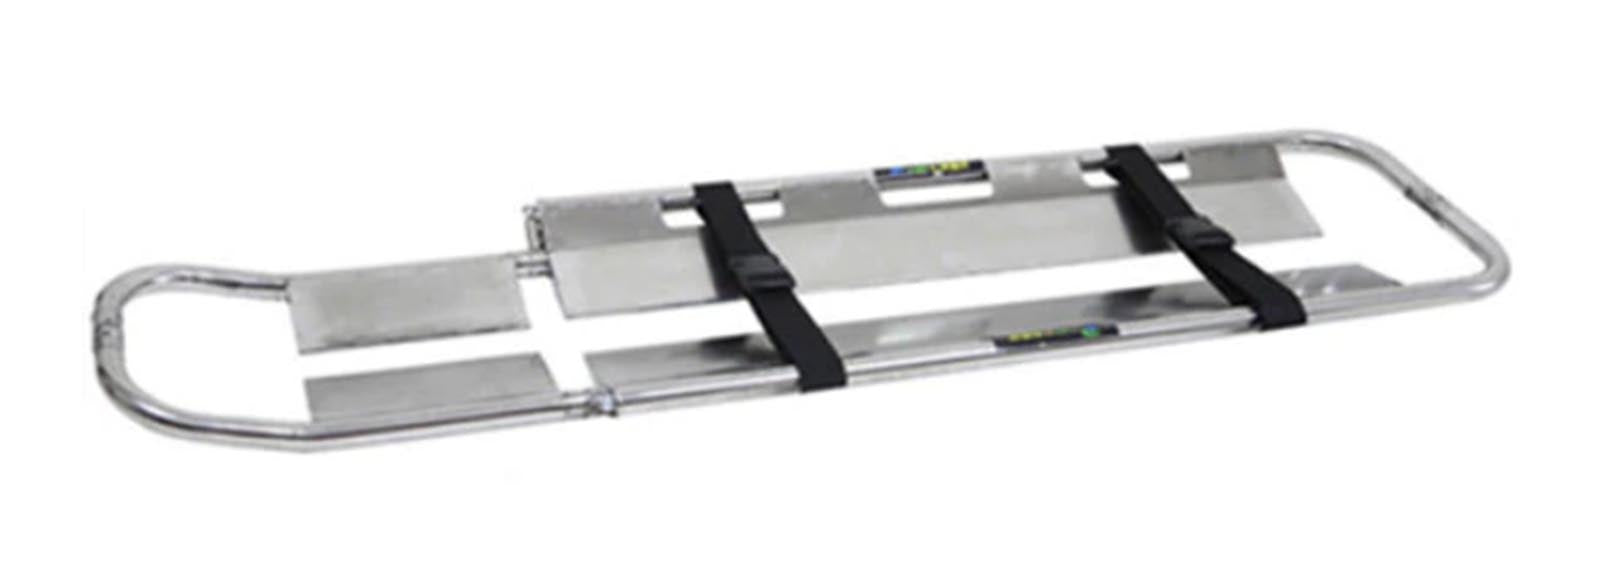 LINE2design Emergency Medical Scoop Stretcher, Adjustable Length with Two Black Safety Straps